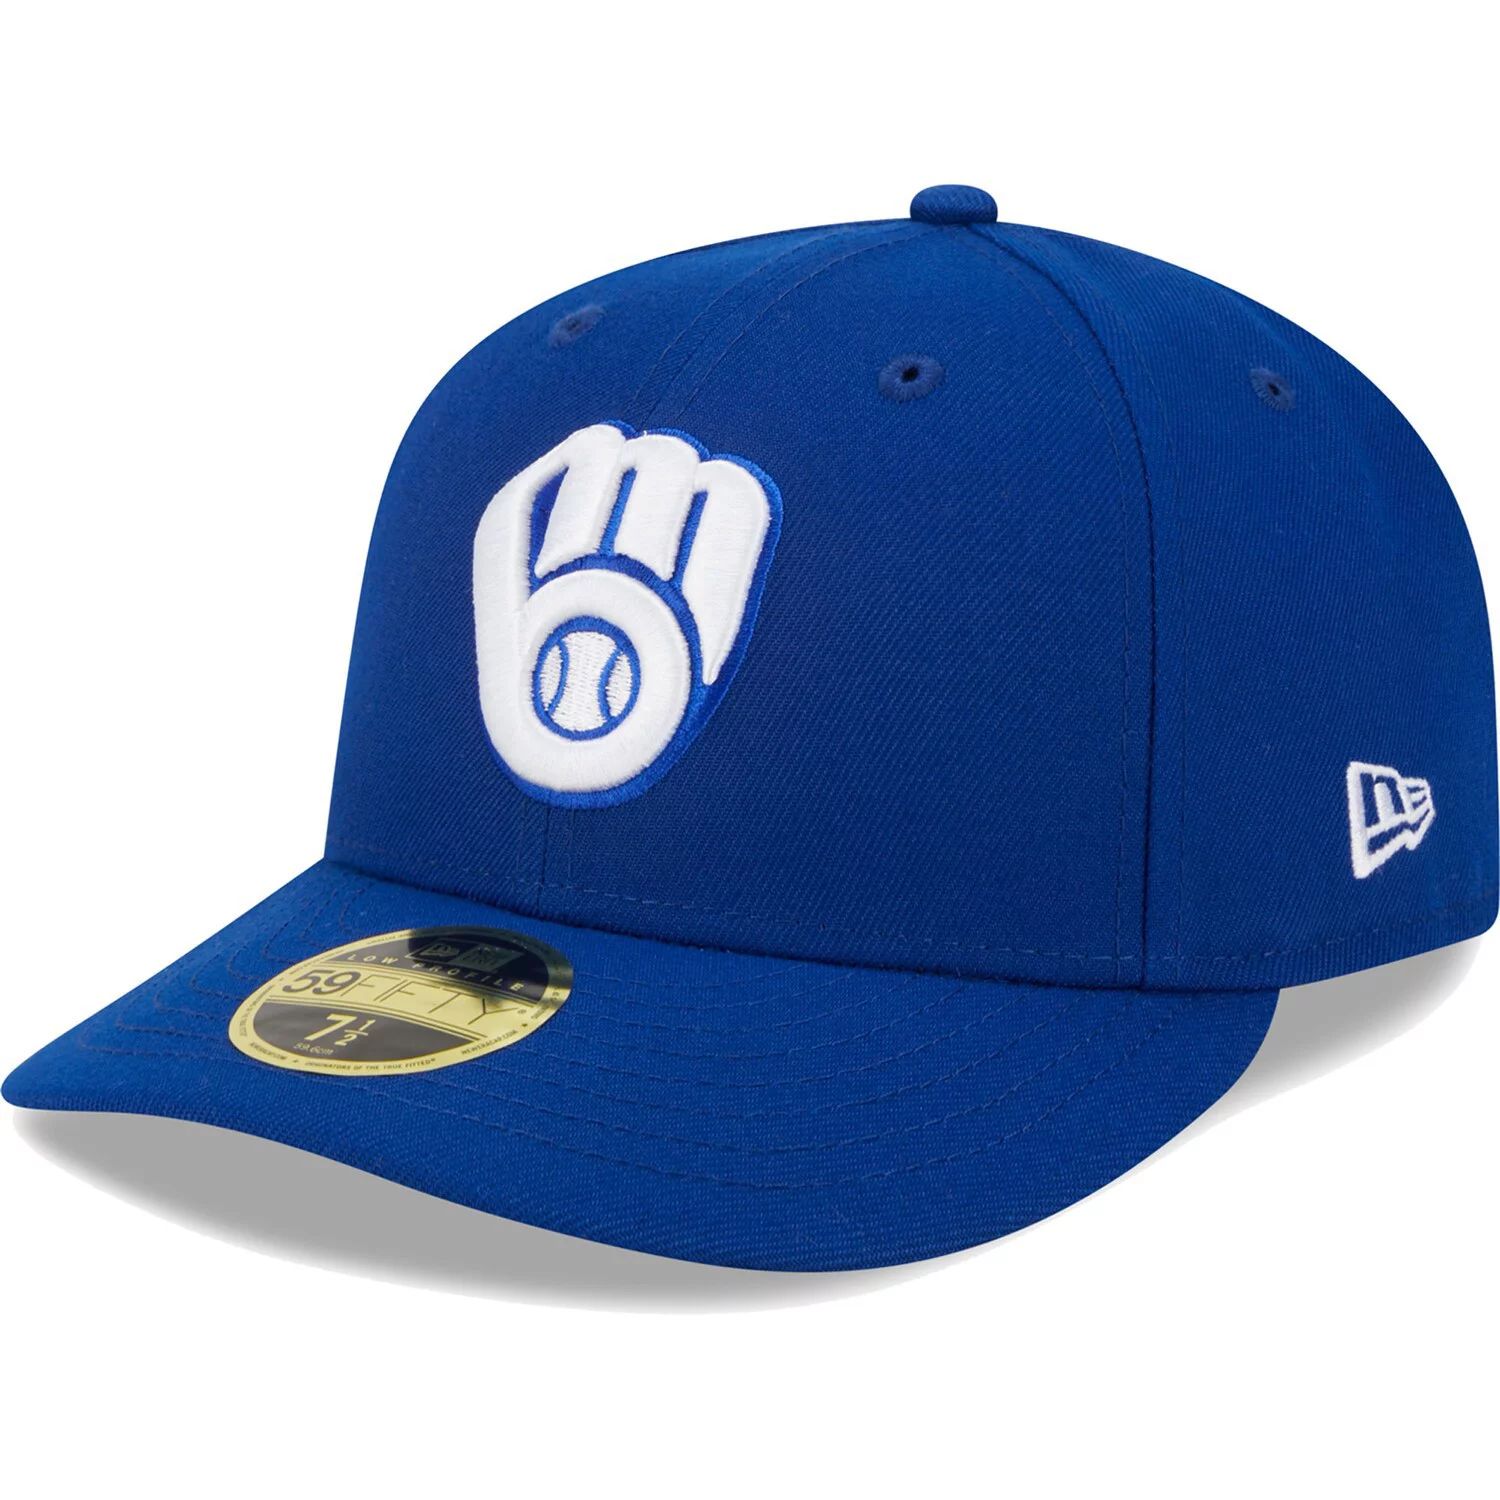 Мужская облегающая шляпа New Era Royal Milwaukee Brewers с белым логотипом 59FIFTY